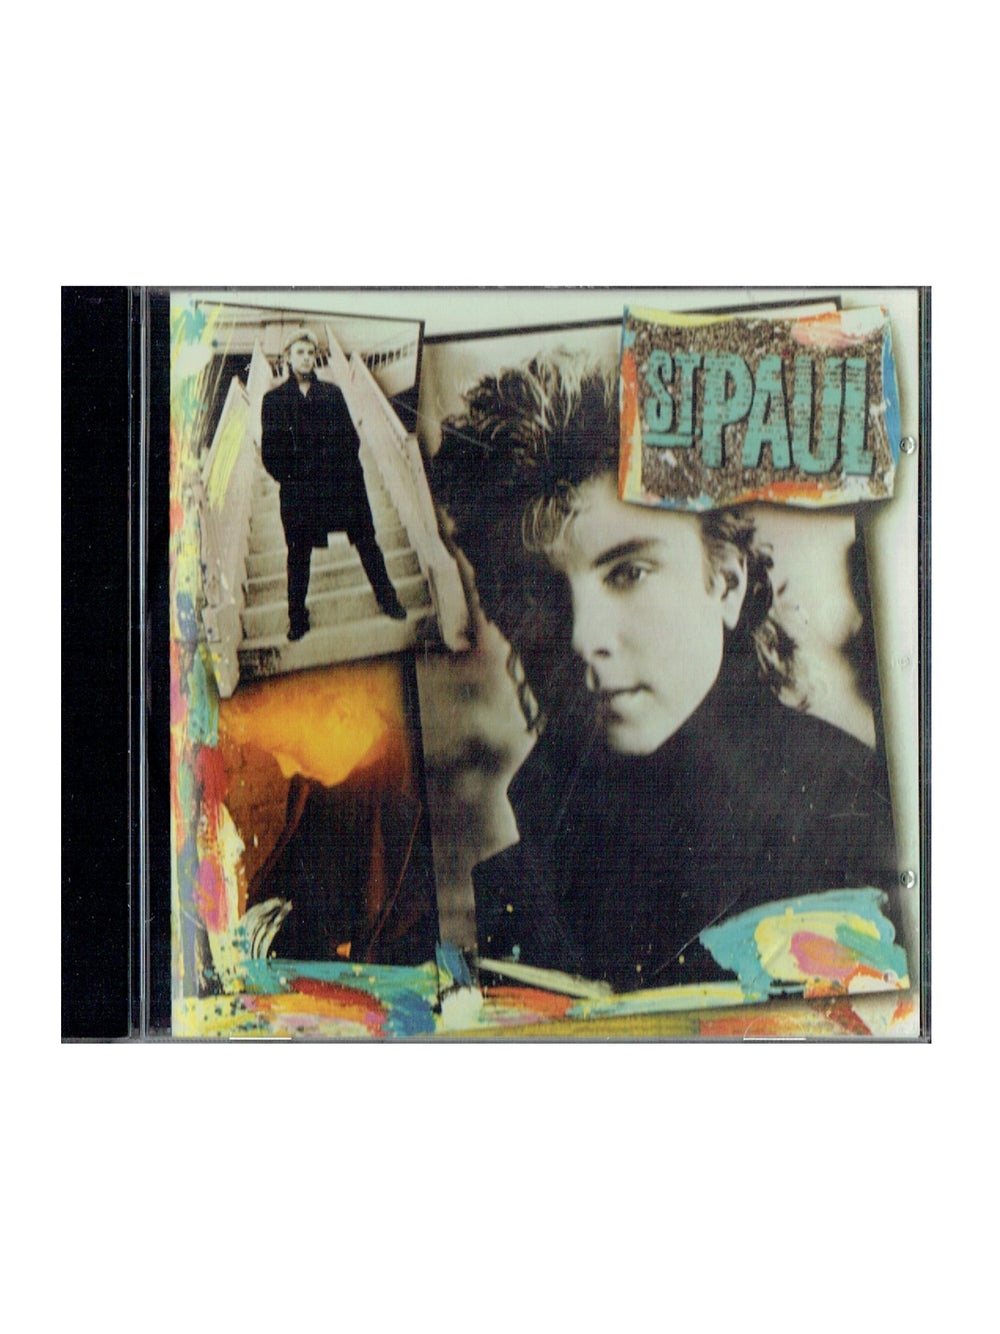 Prince – ST. PAUL The Family Self Titled Original Compact Disc CD Album 1987 US 8 Tracks Prince